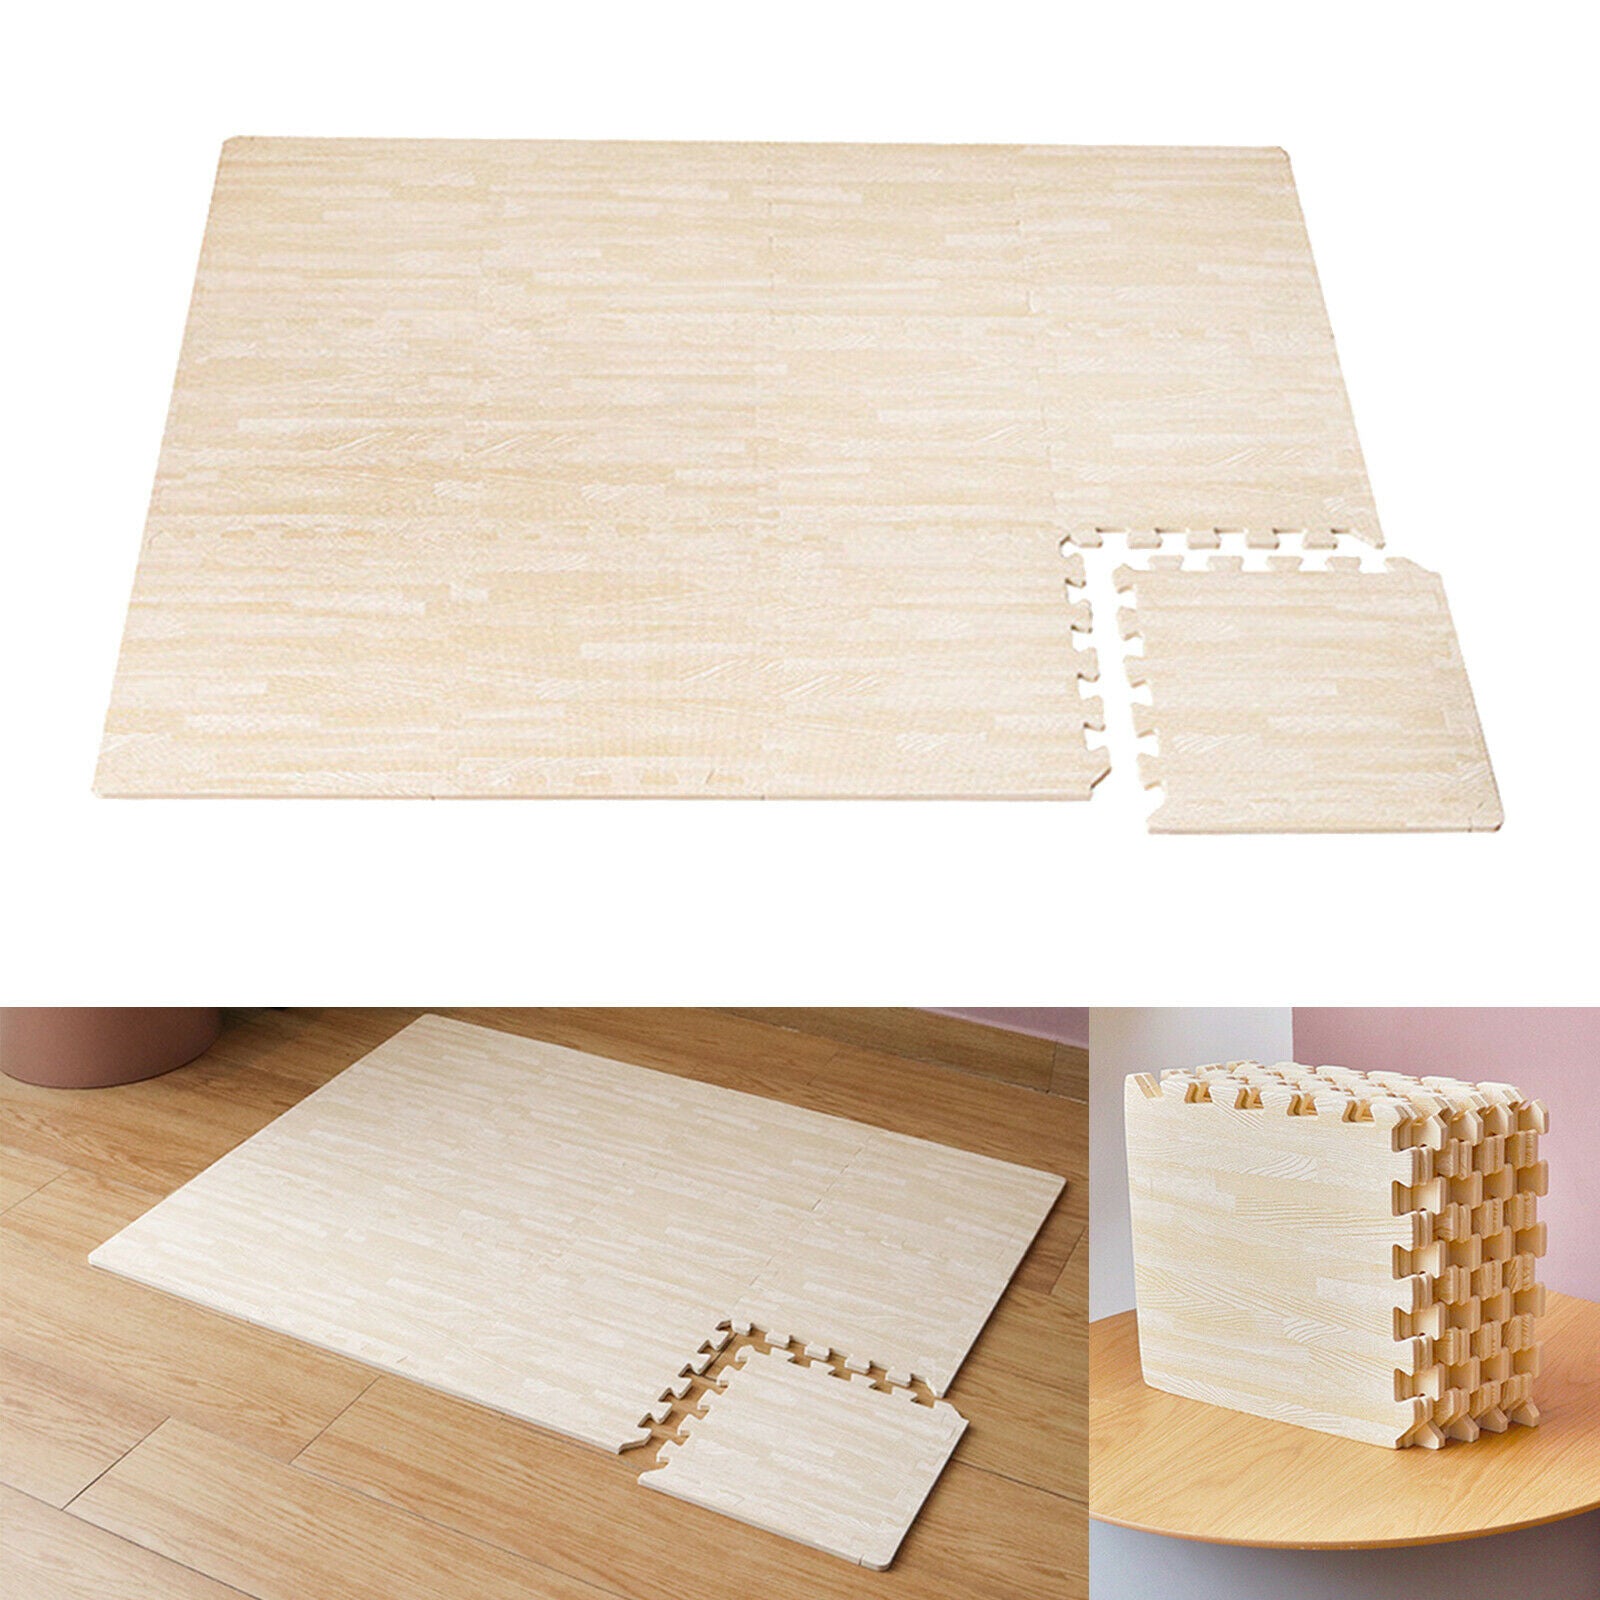 12x Soft EVA Foam Puzzle Mat Square Padding Tiles Play Mat for Yoga Camping